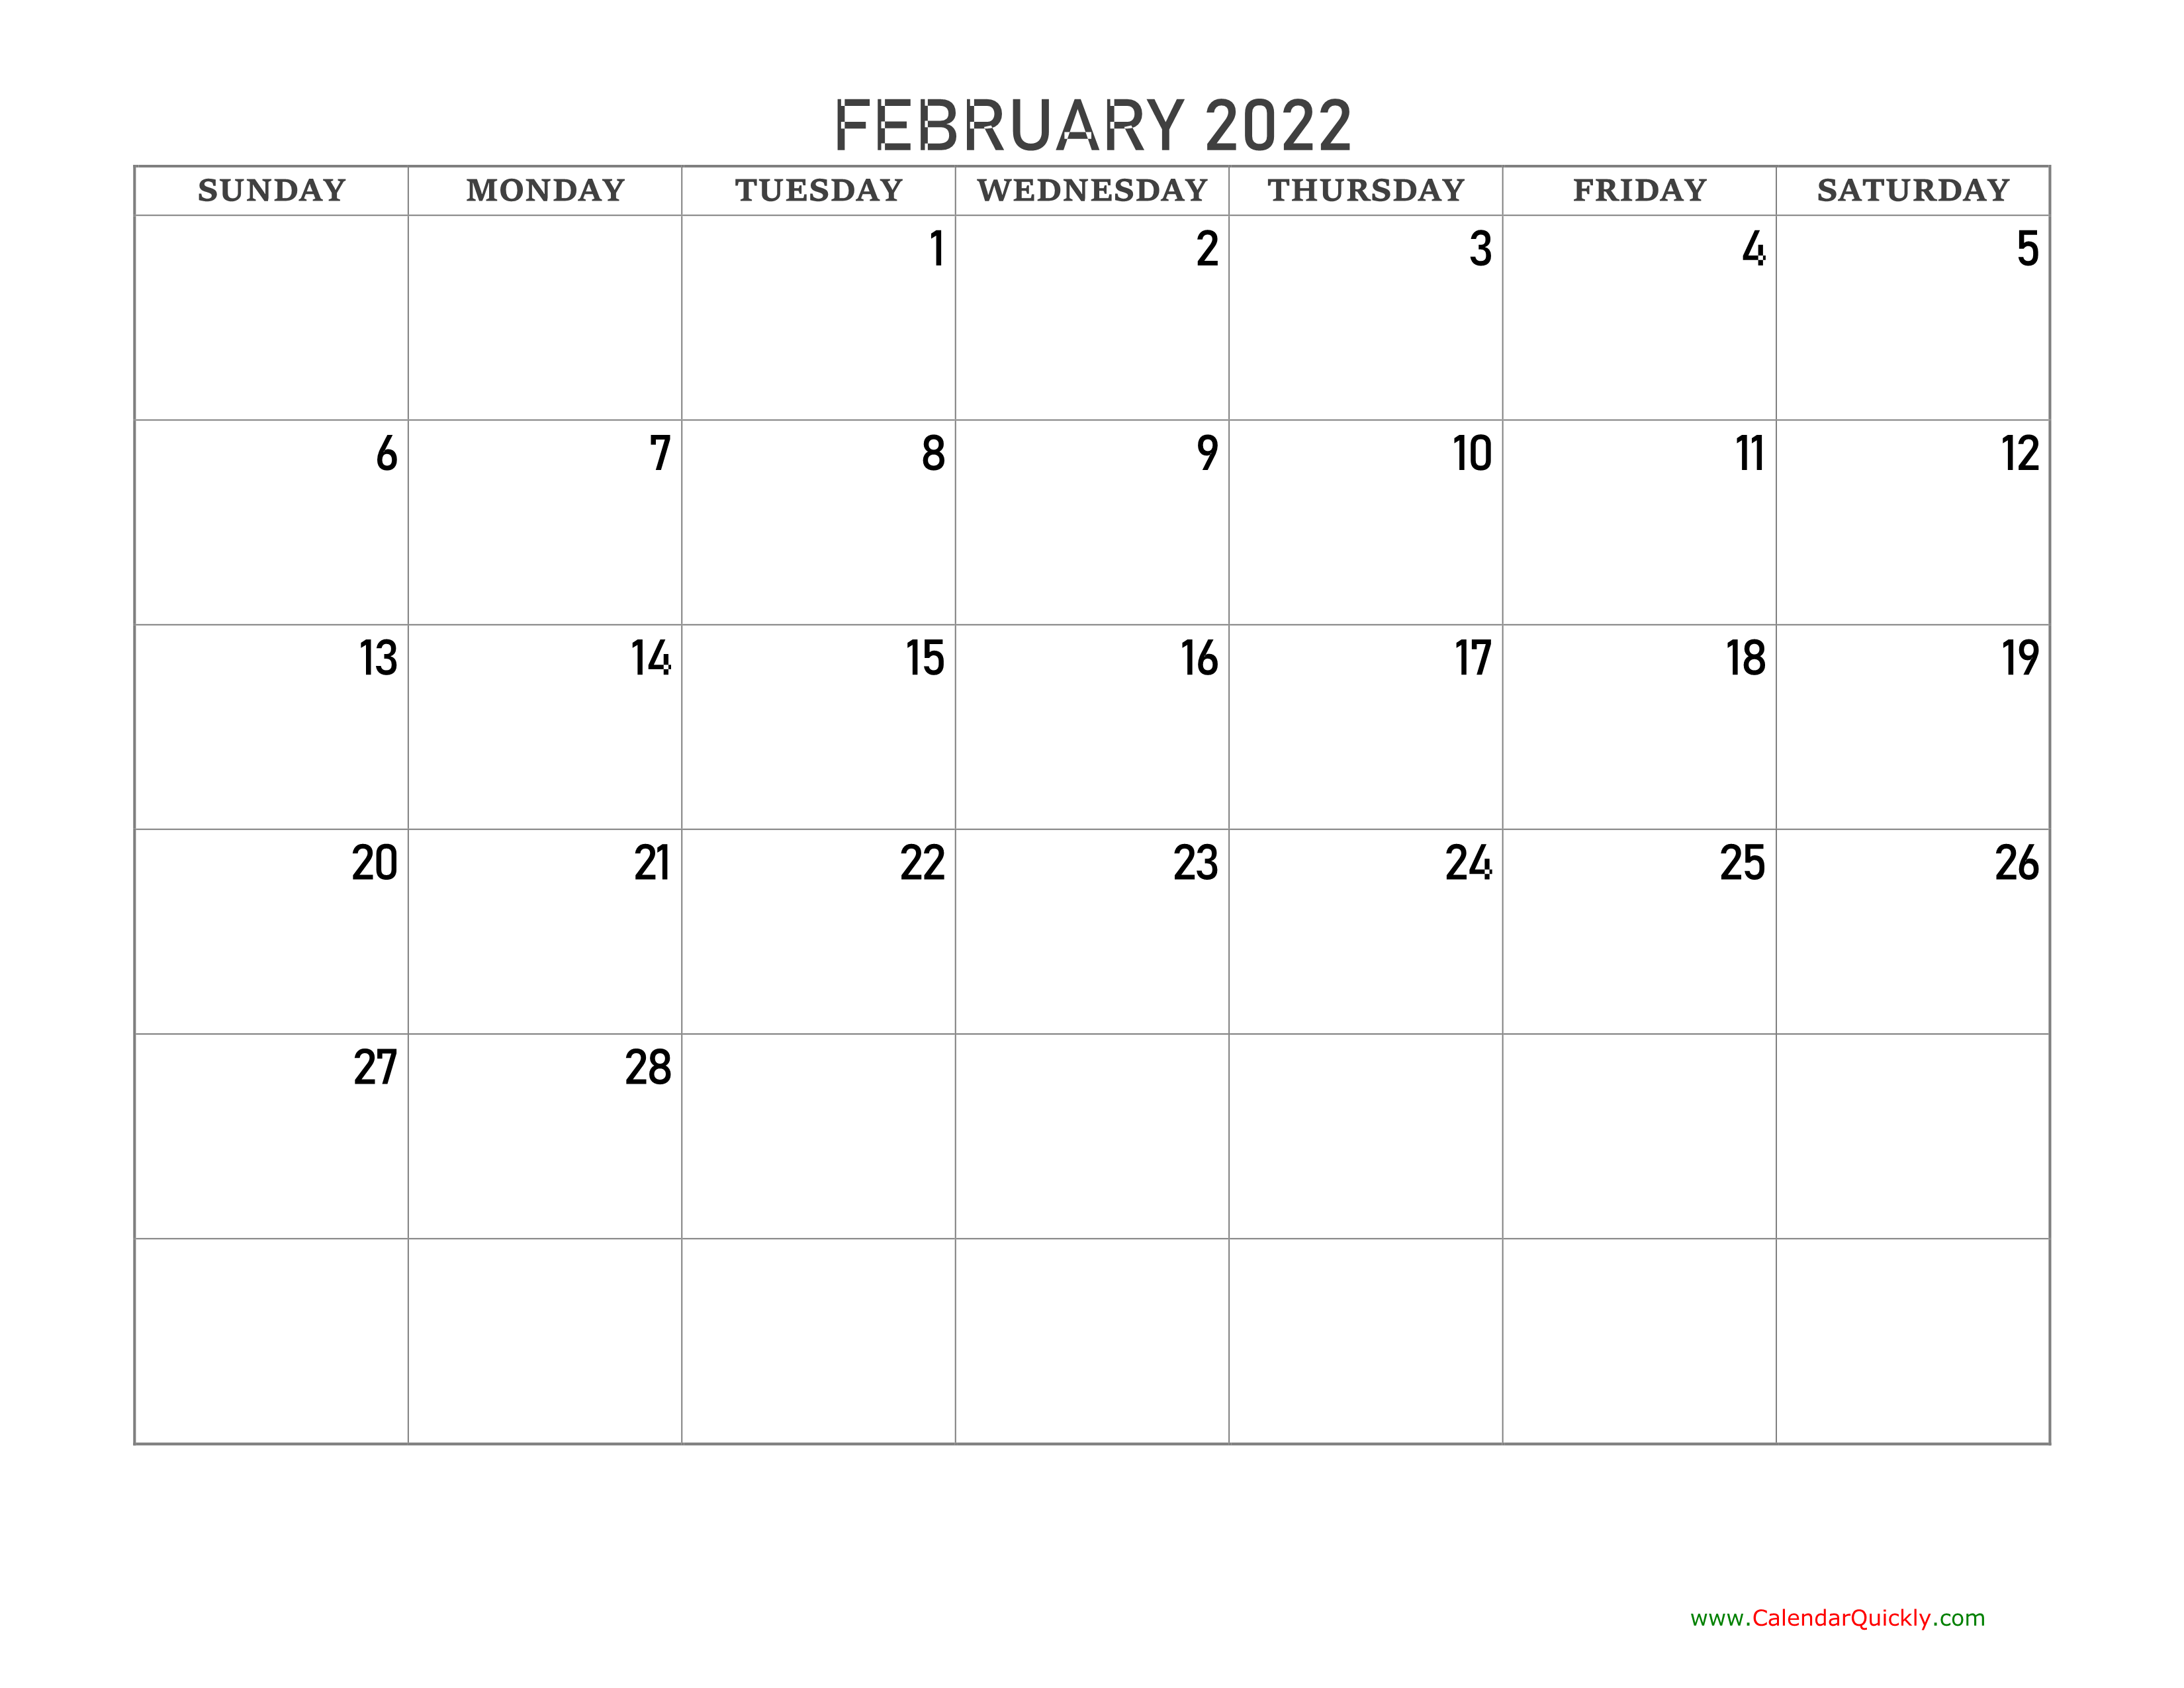 February 2022 Blank Calendar | Calendar Quickly